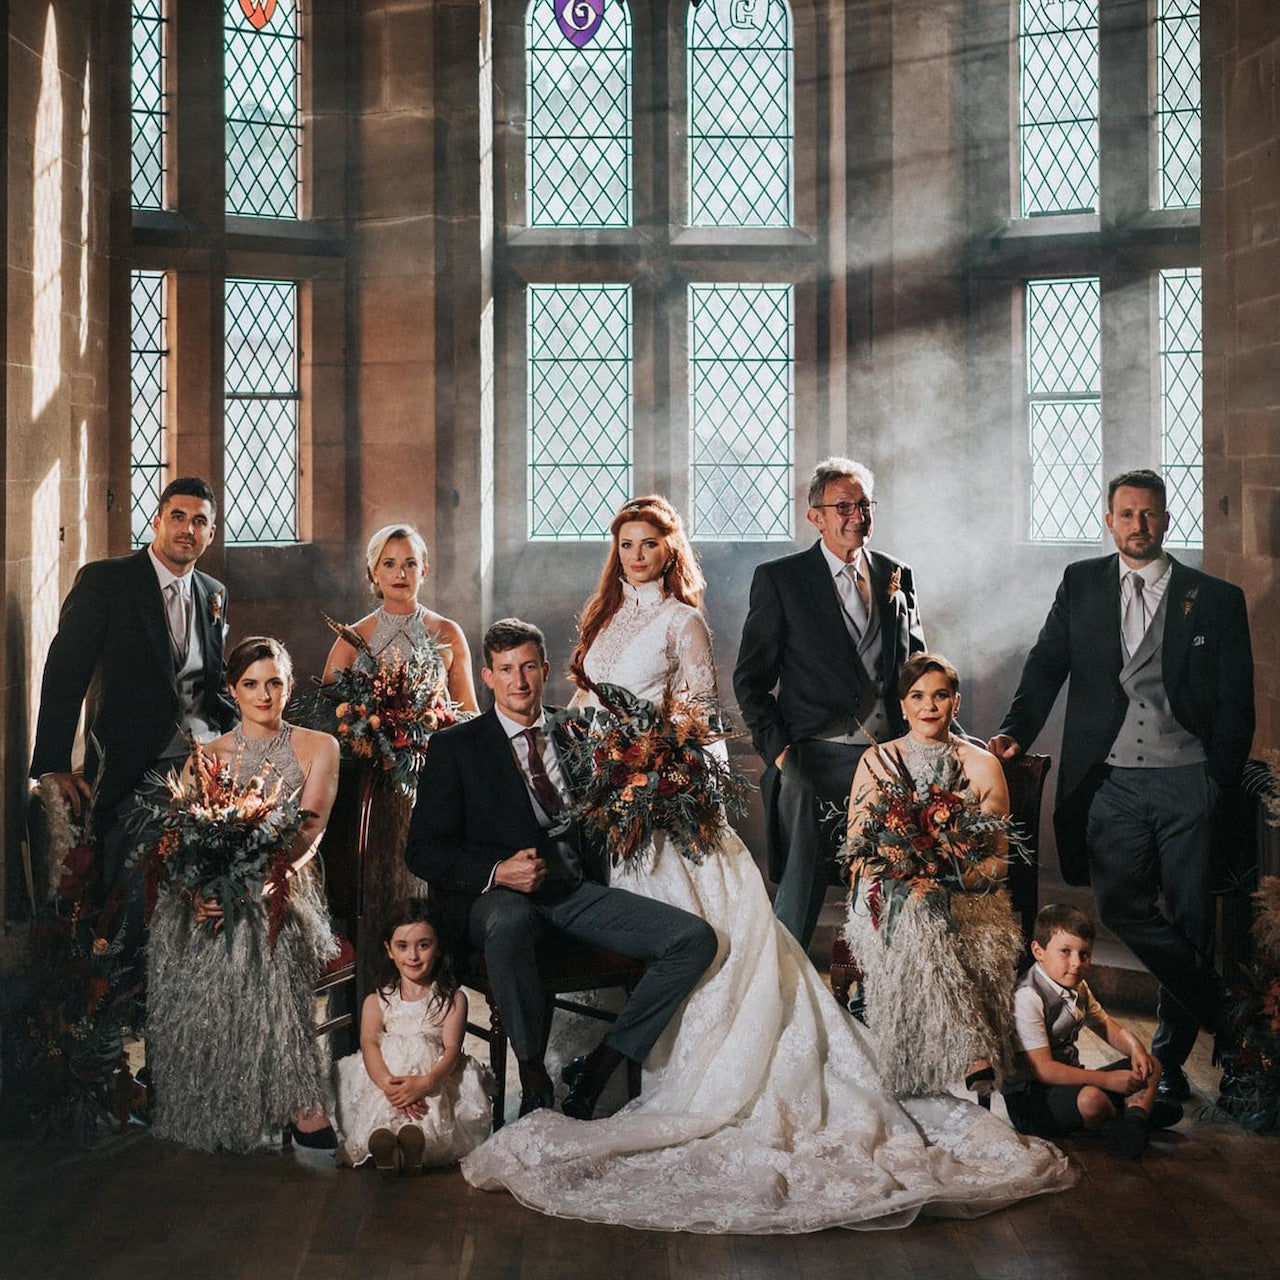 Shoot a wedding with us | Tarporley - Photo & Cinema